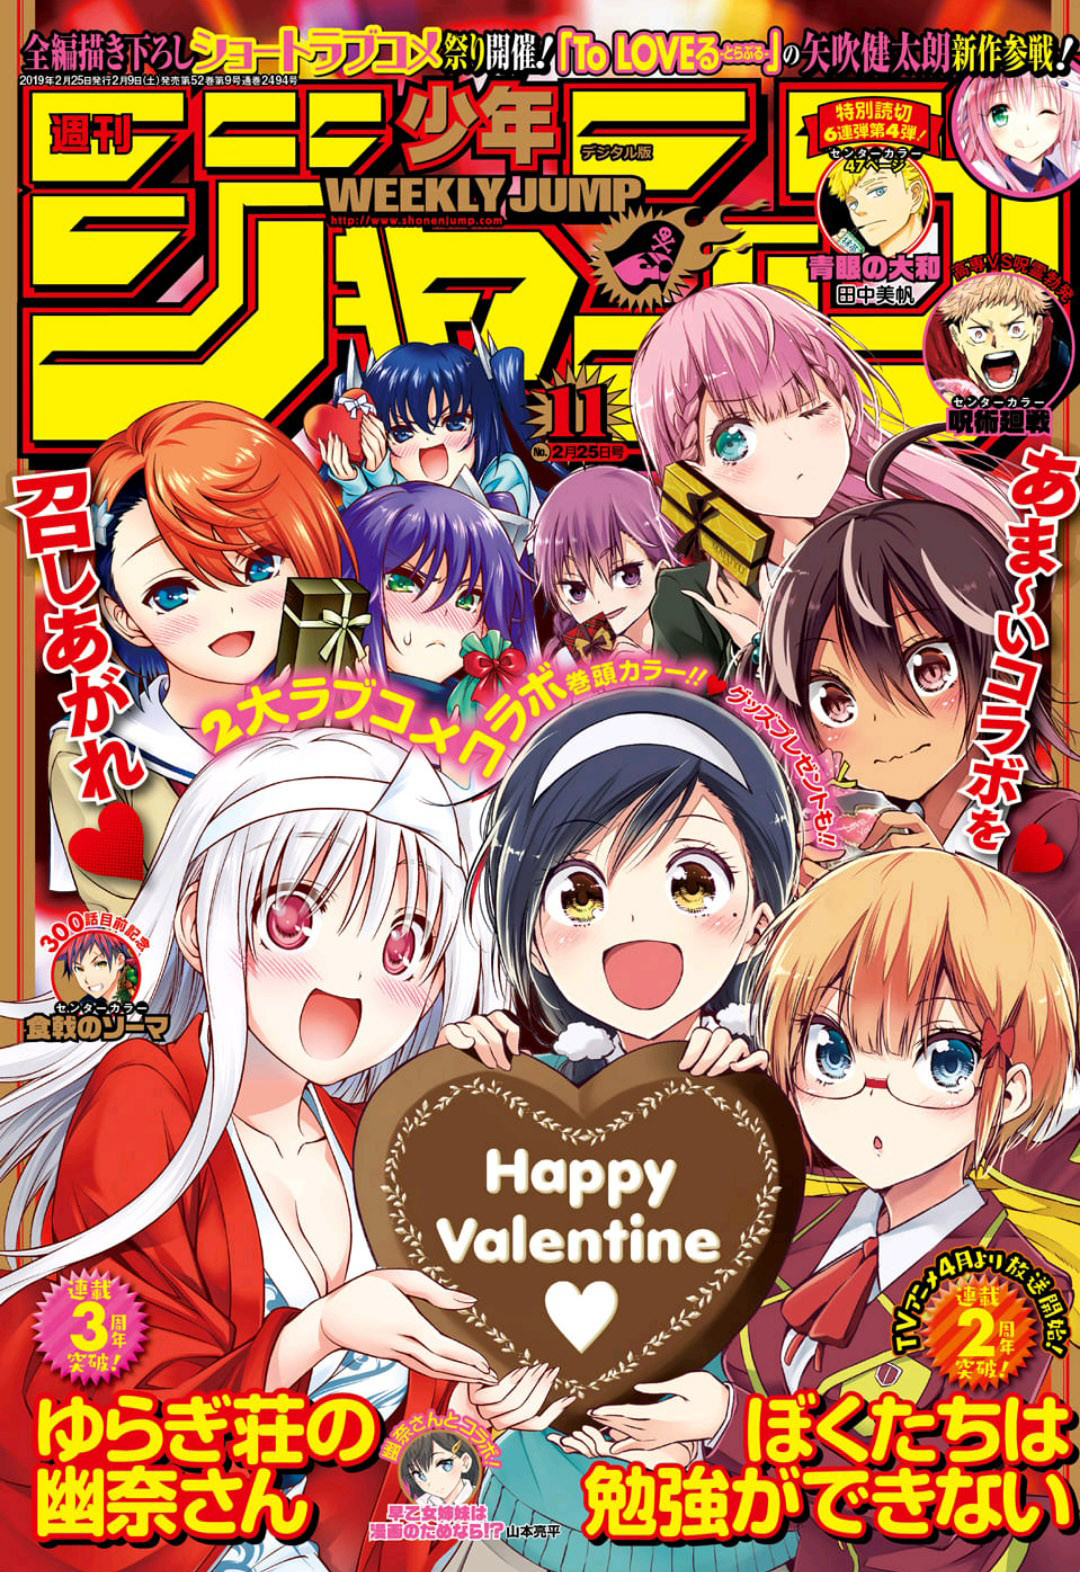 Weekly Shonen Jump Issue 11 19 Jump Database Fandom